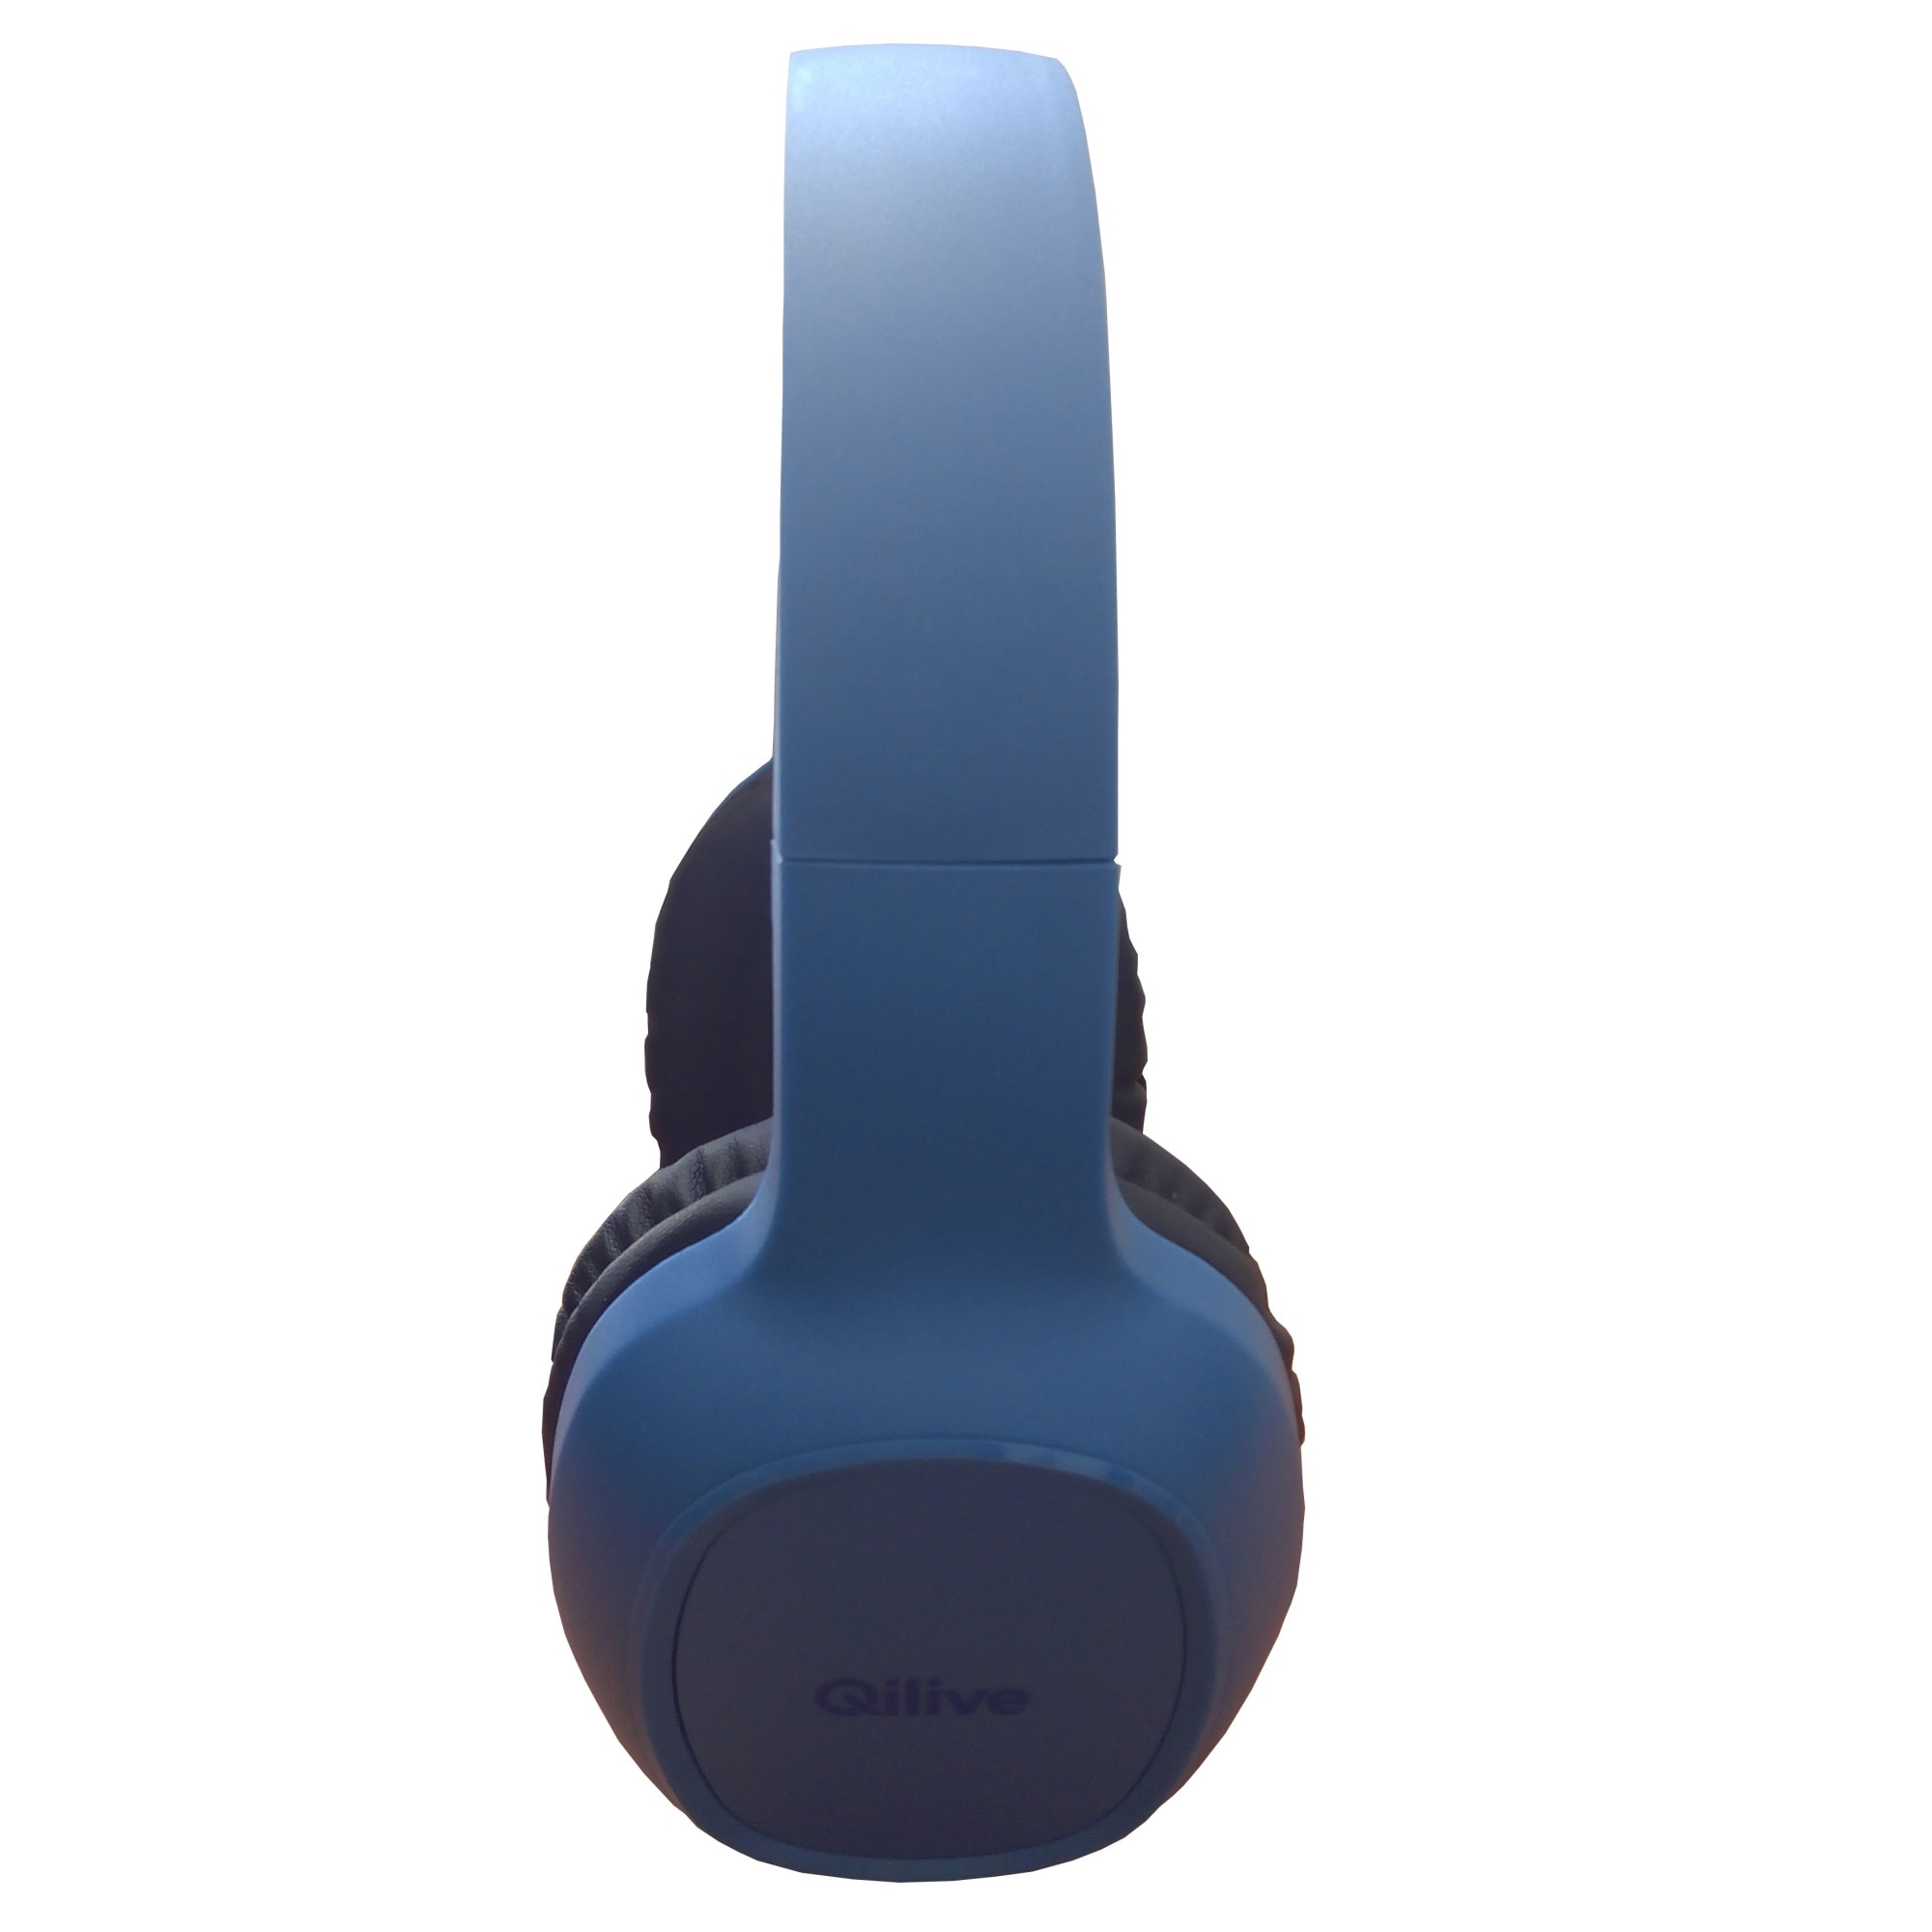 QILIVE Casque audio enfant Bluetooth - Bleu/vert - 137505 Q.1992